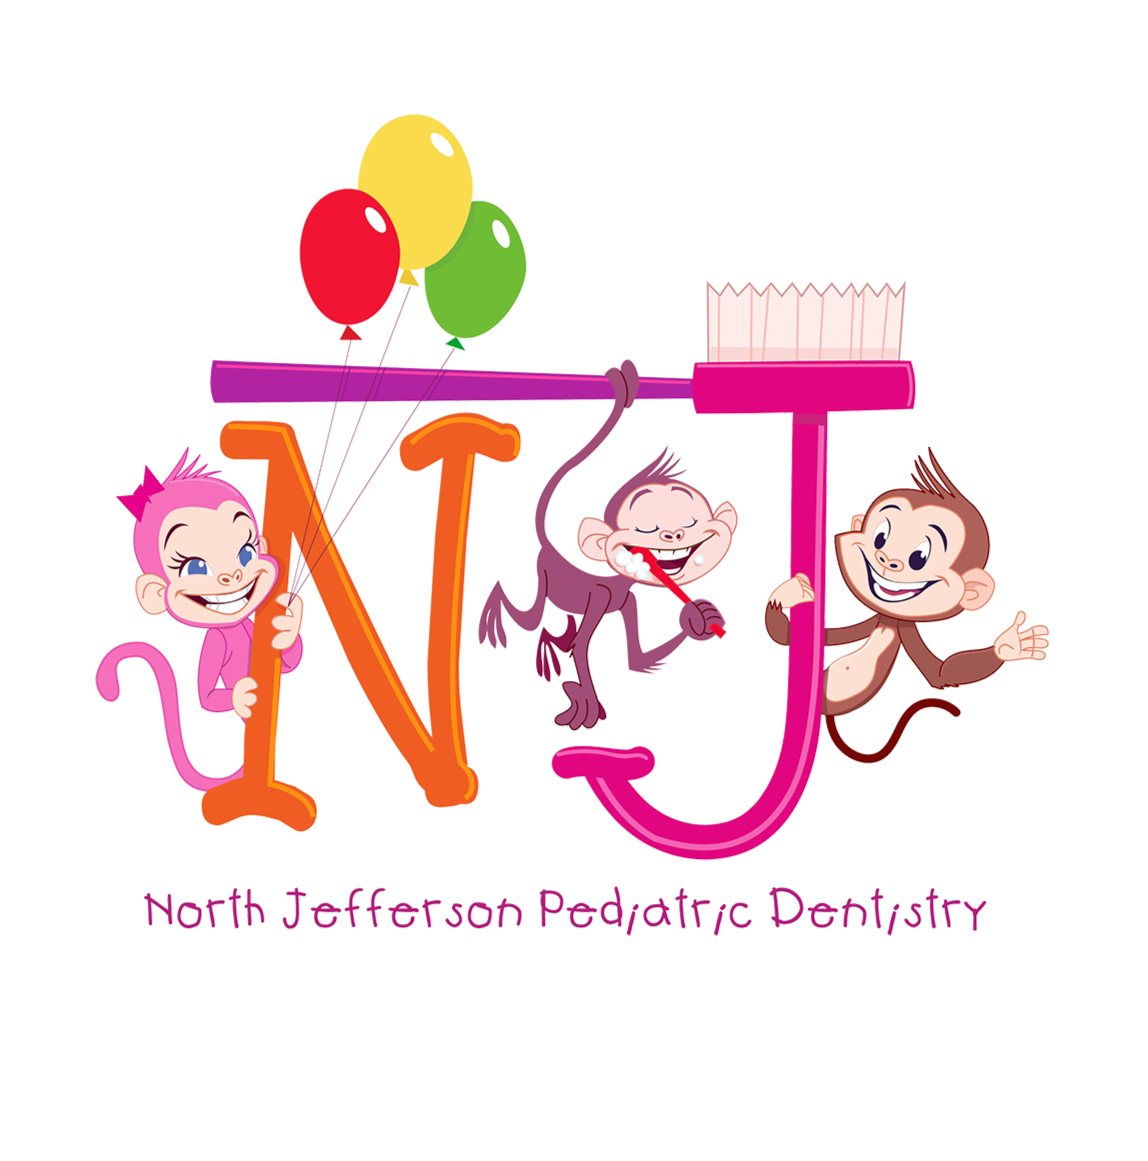 North Jefferson Pediatric Dentistry